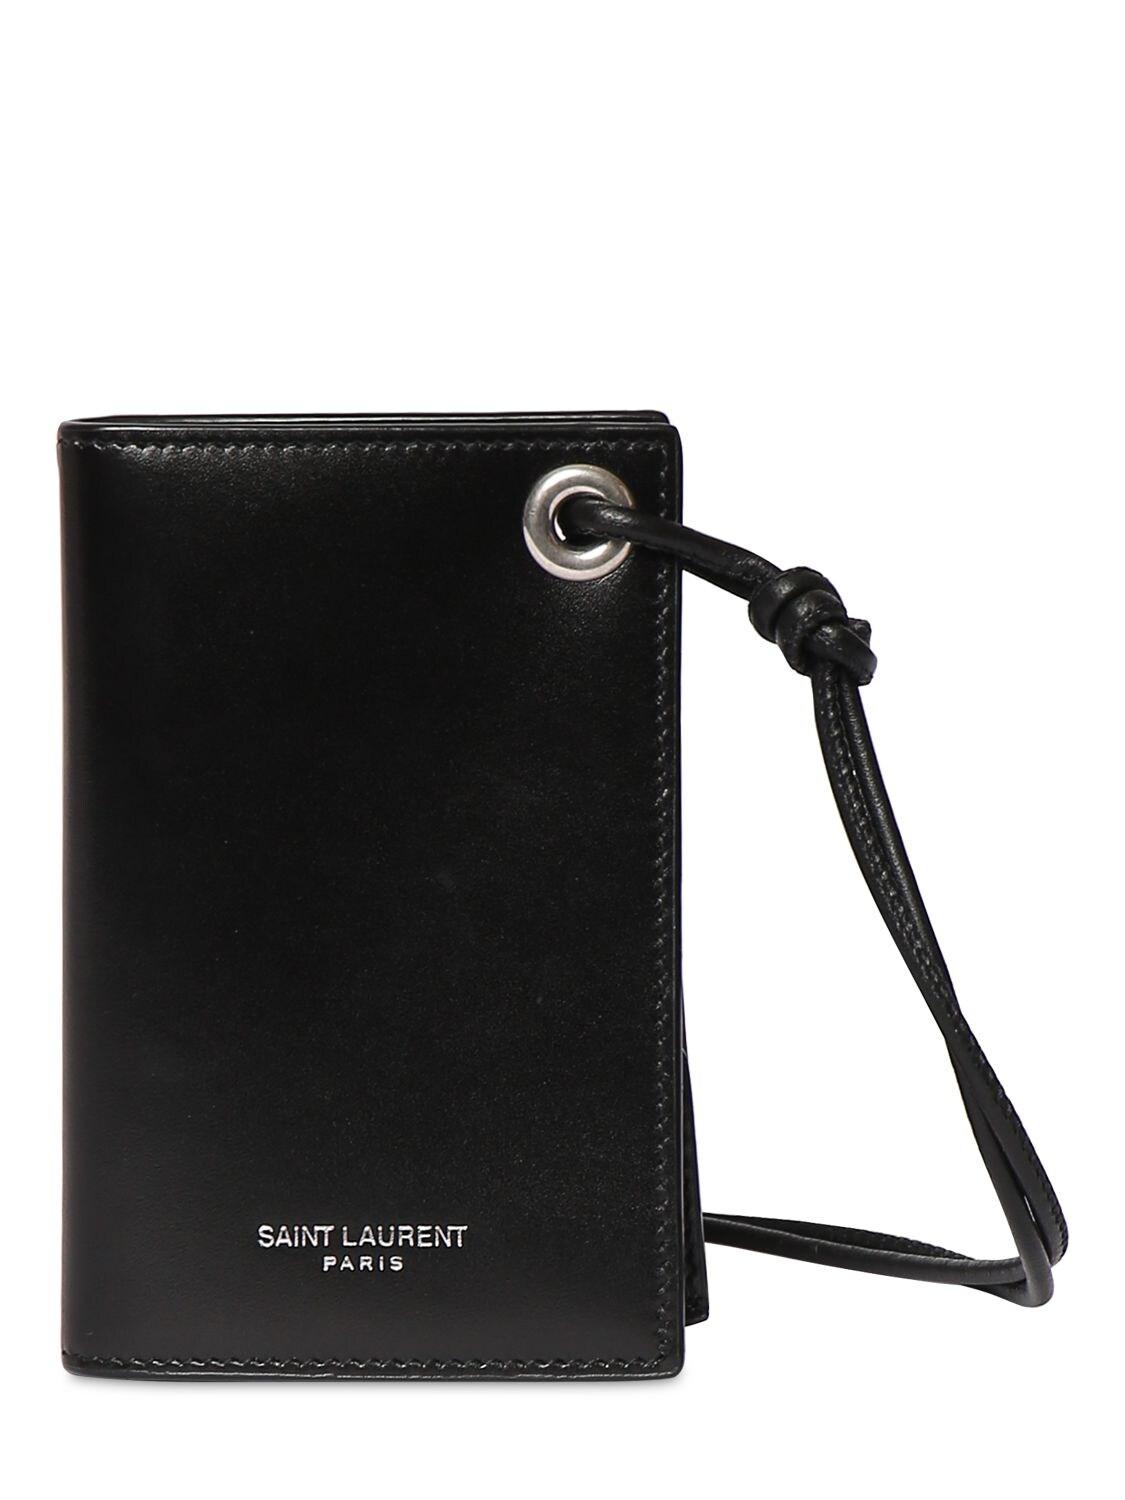 Saint Laurent Ysl Leather Card Holder W/ Neck Strap in Black for